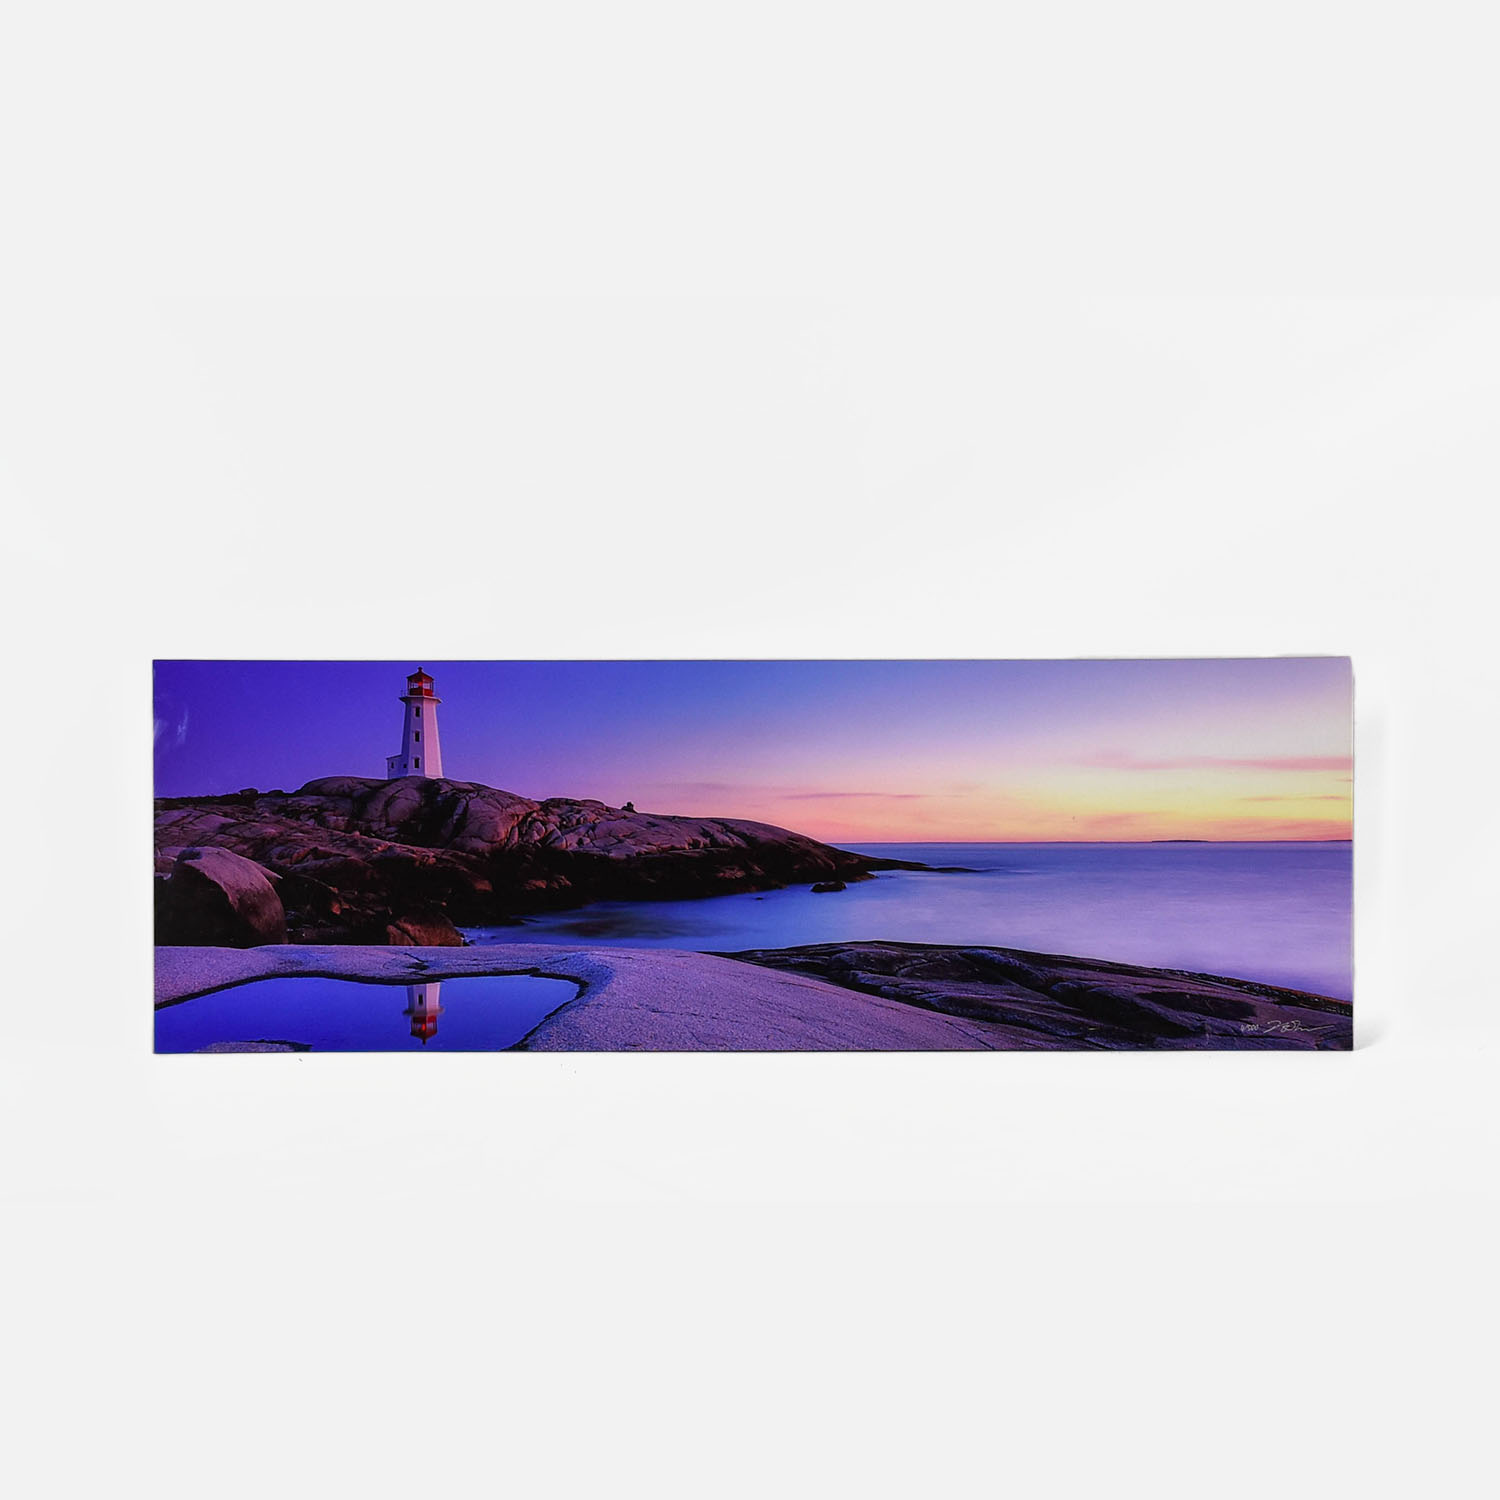 Landscape Photograph on Acrylic of Lighthouse